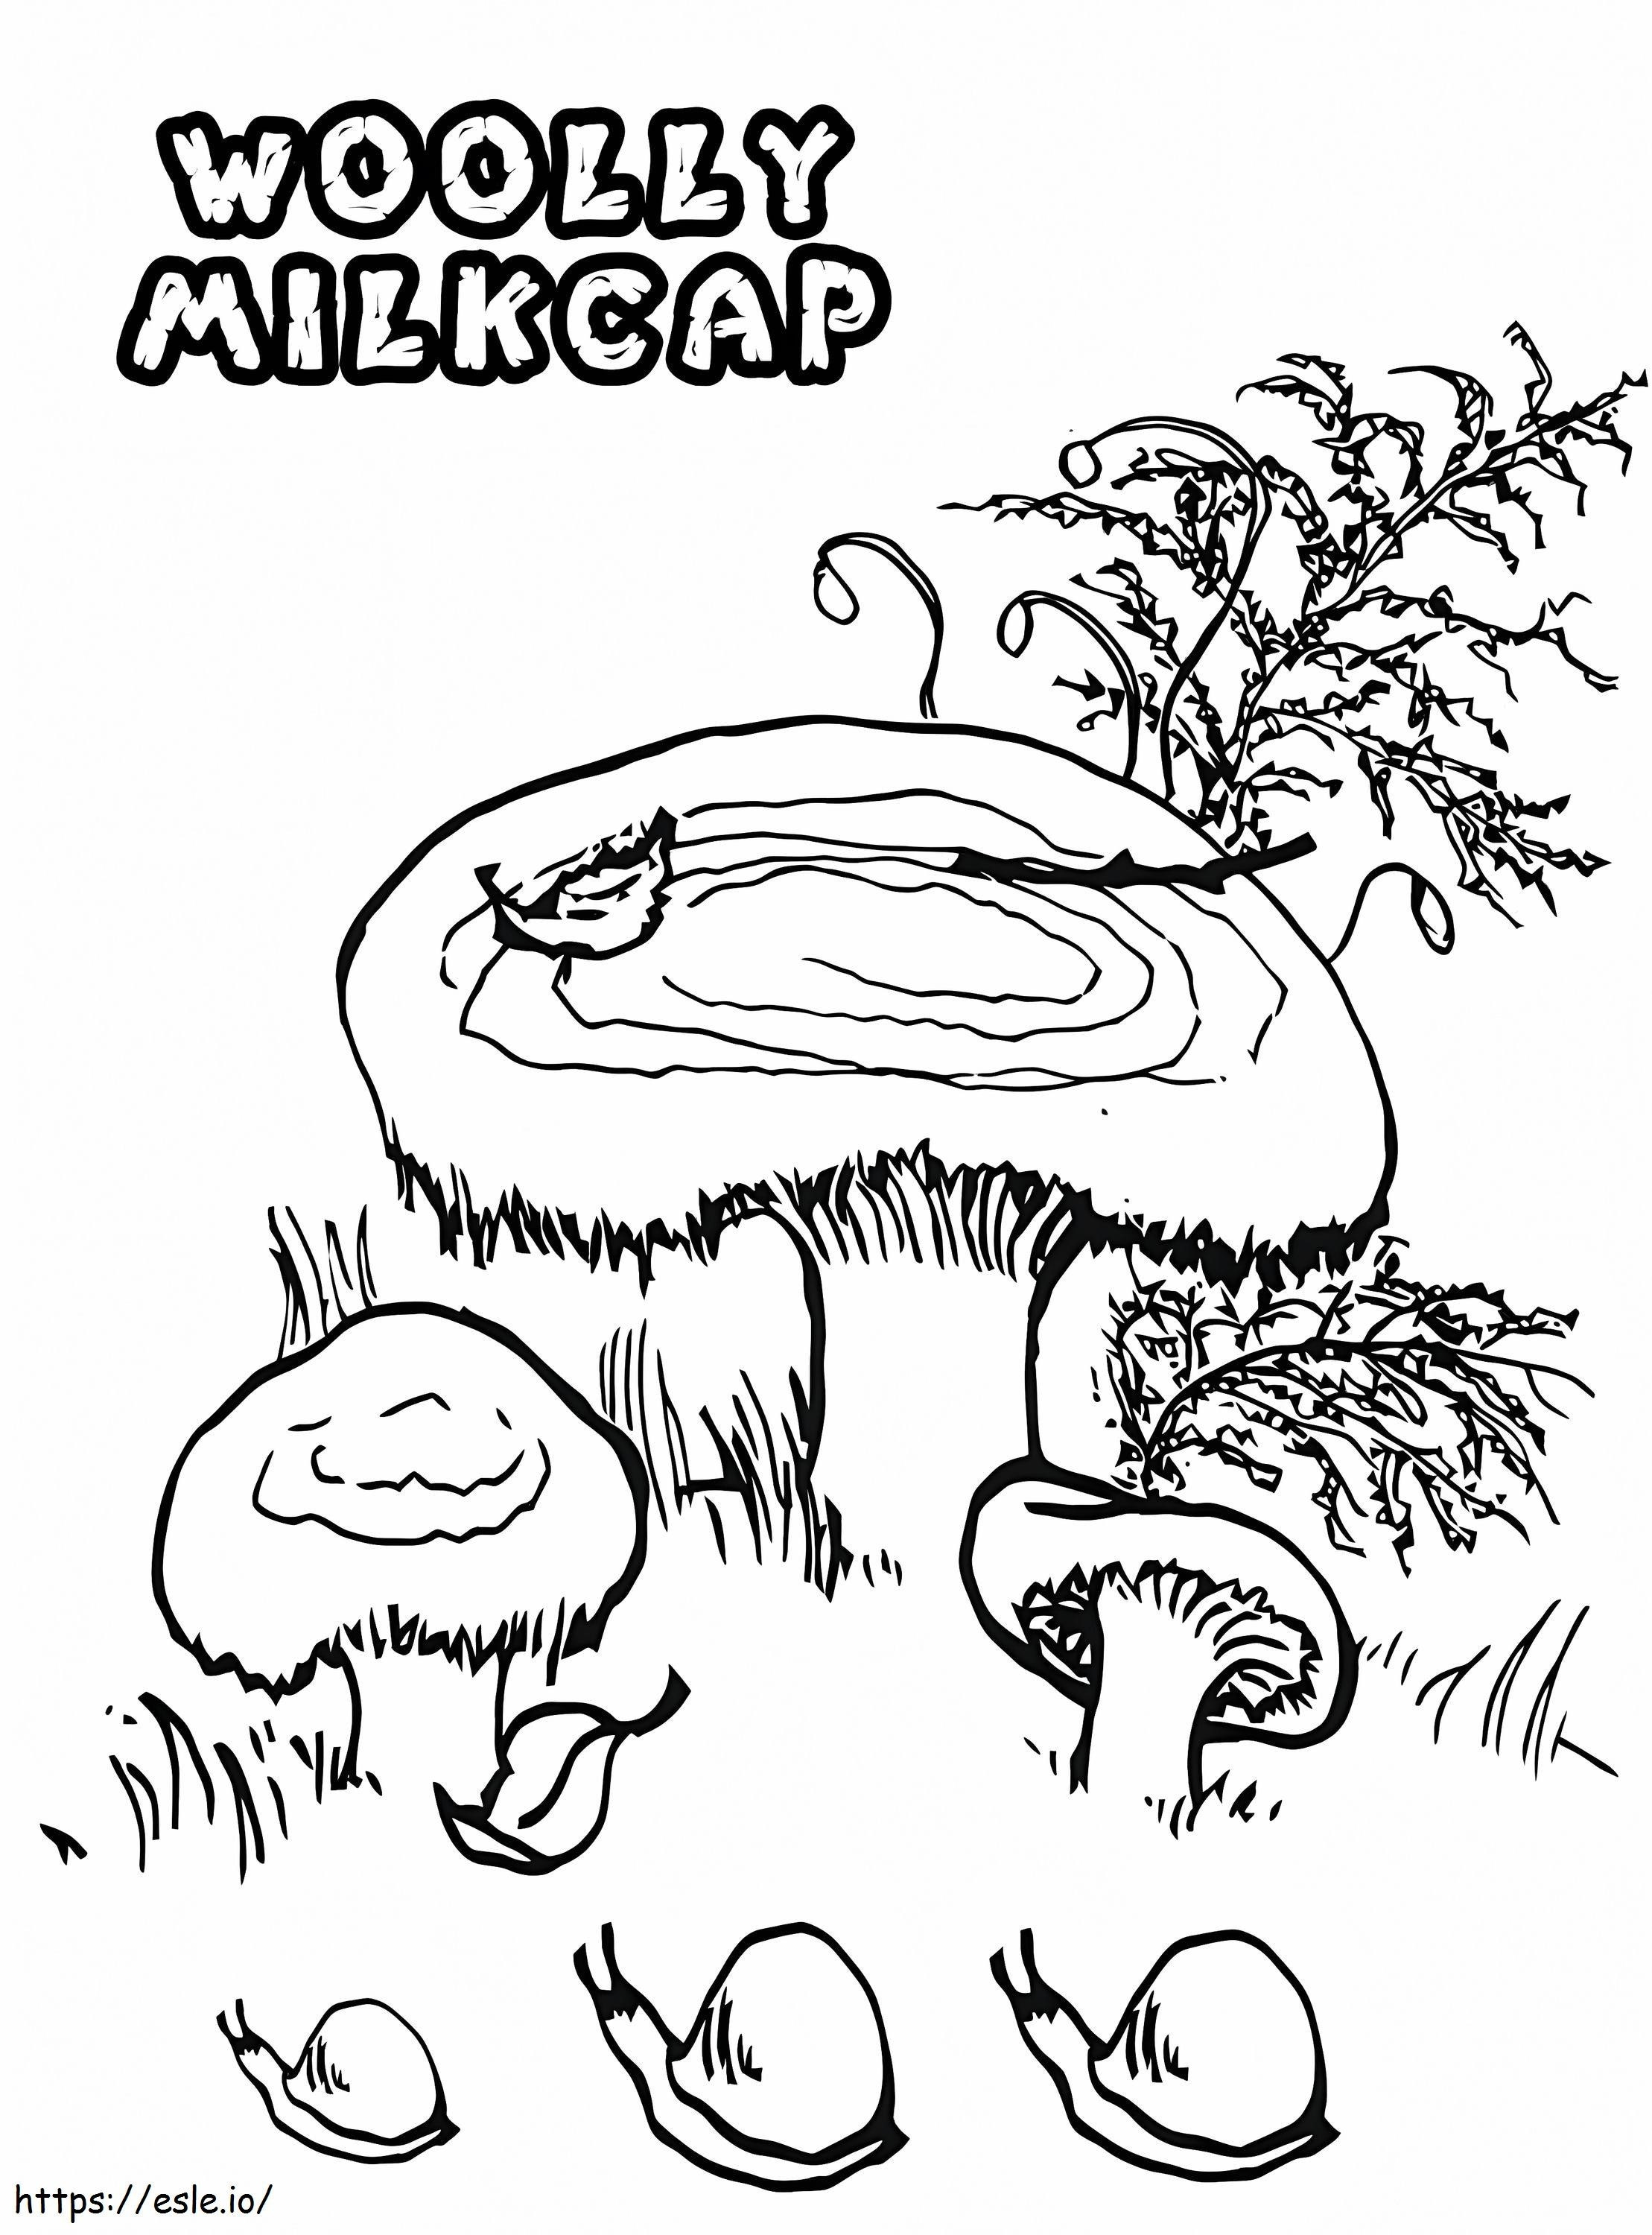 Woolly Milkcap Mushrooms coloring page